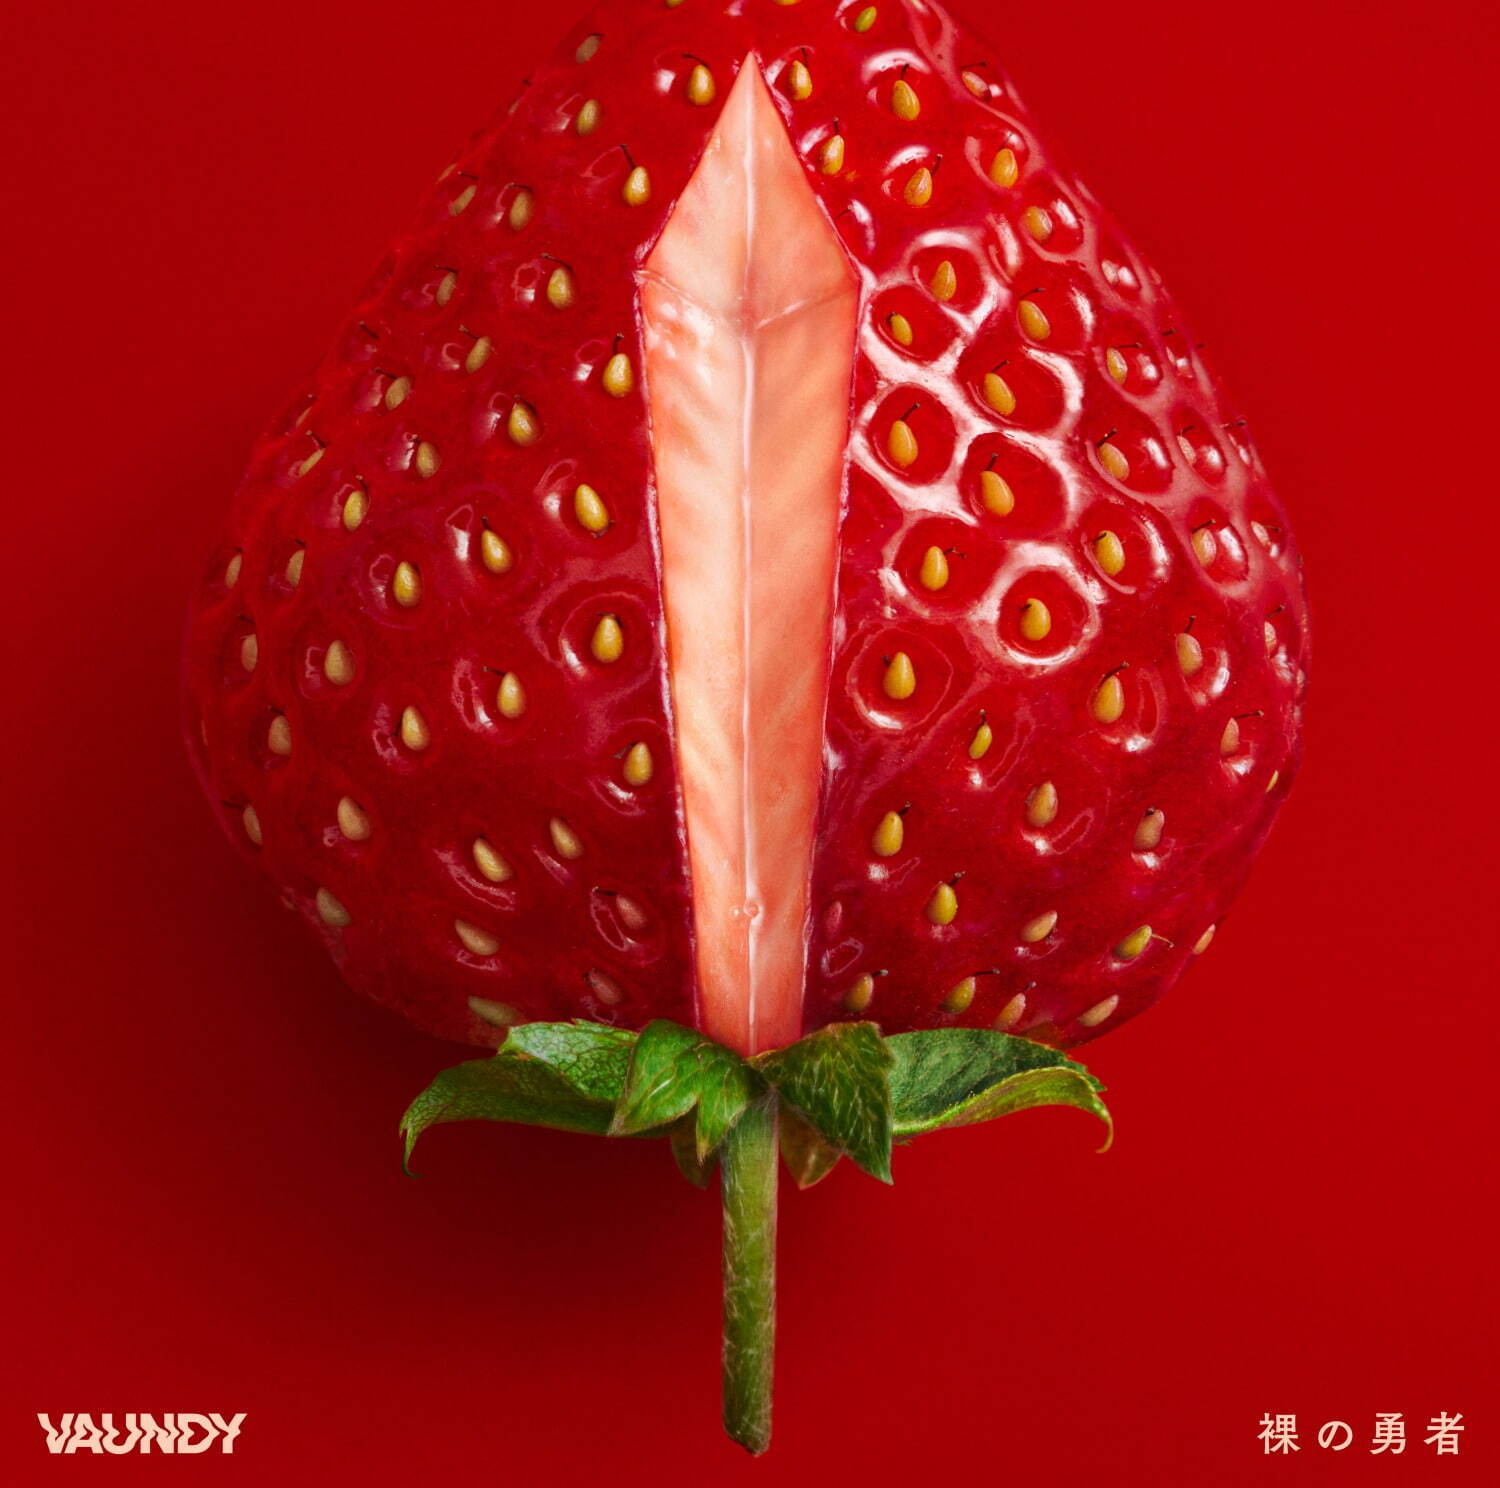 Vaundy 最新EP『裸の勇者』通常盤[CD] 1,430円